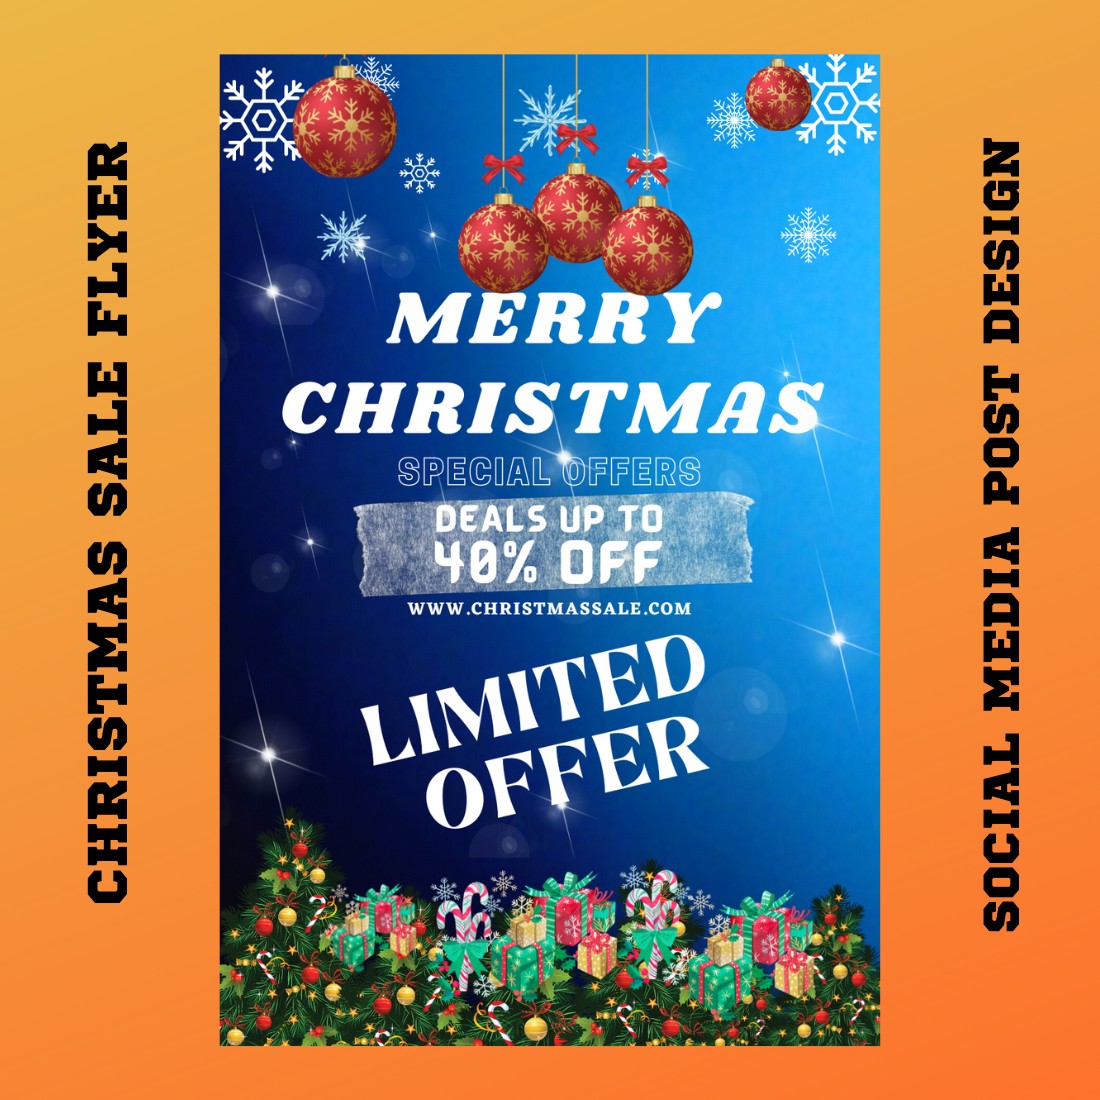 Christmas Sale Flyer created by HeavensDigital.